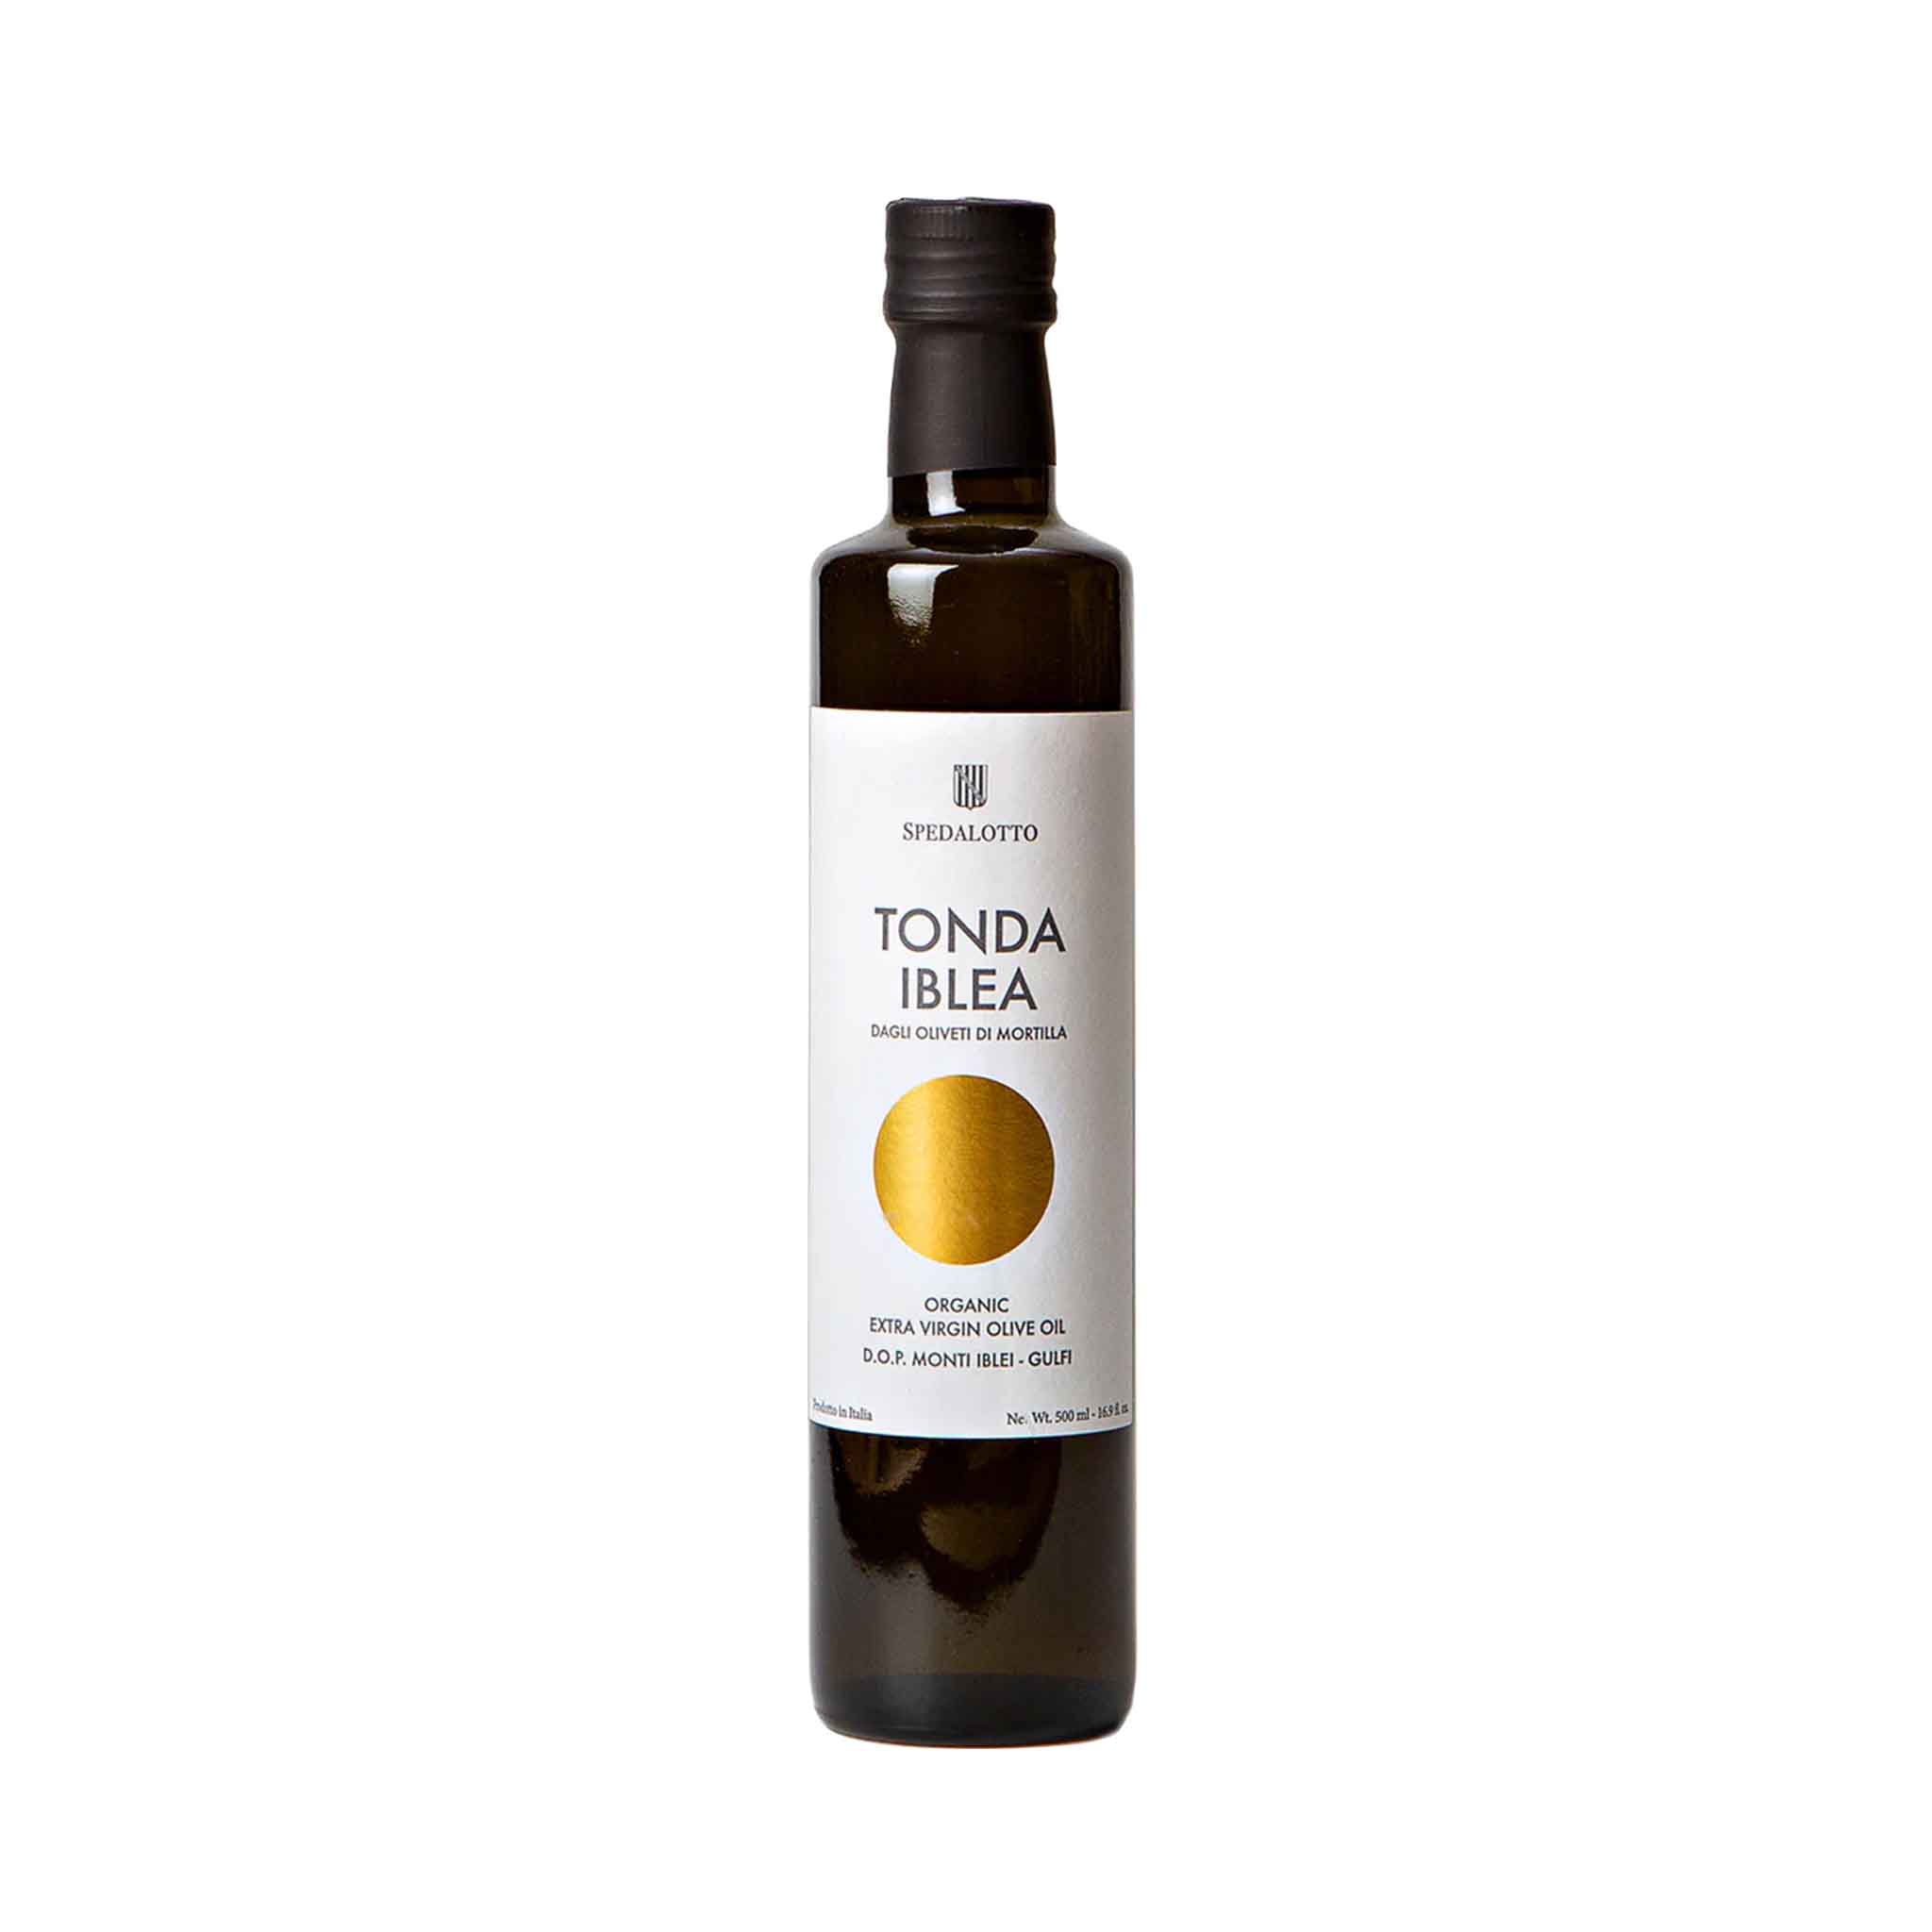 Tonda DOP Iblea Extra Virgin Olive Oil